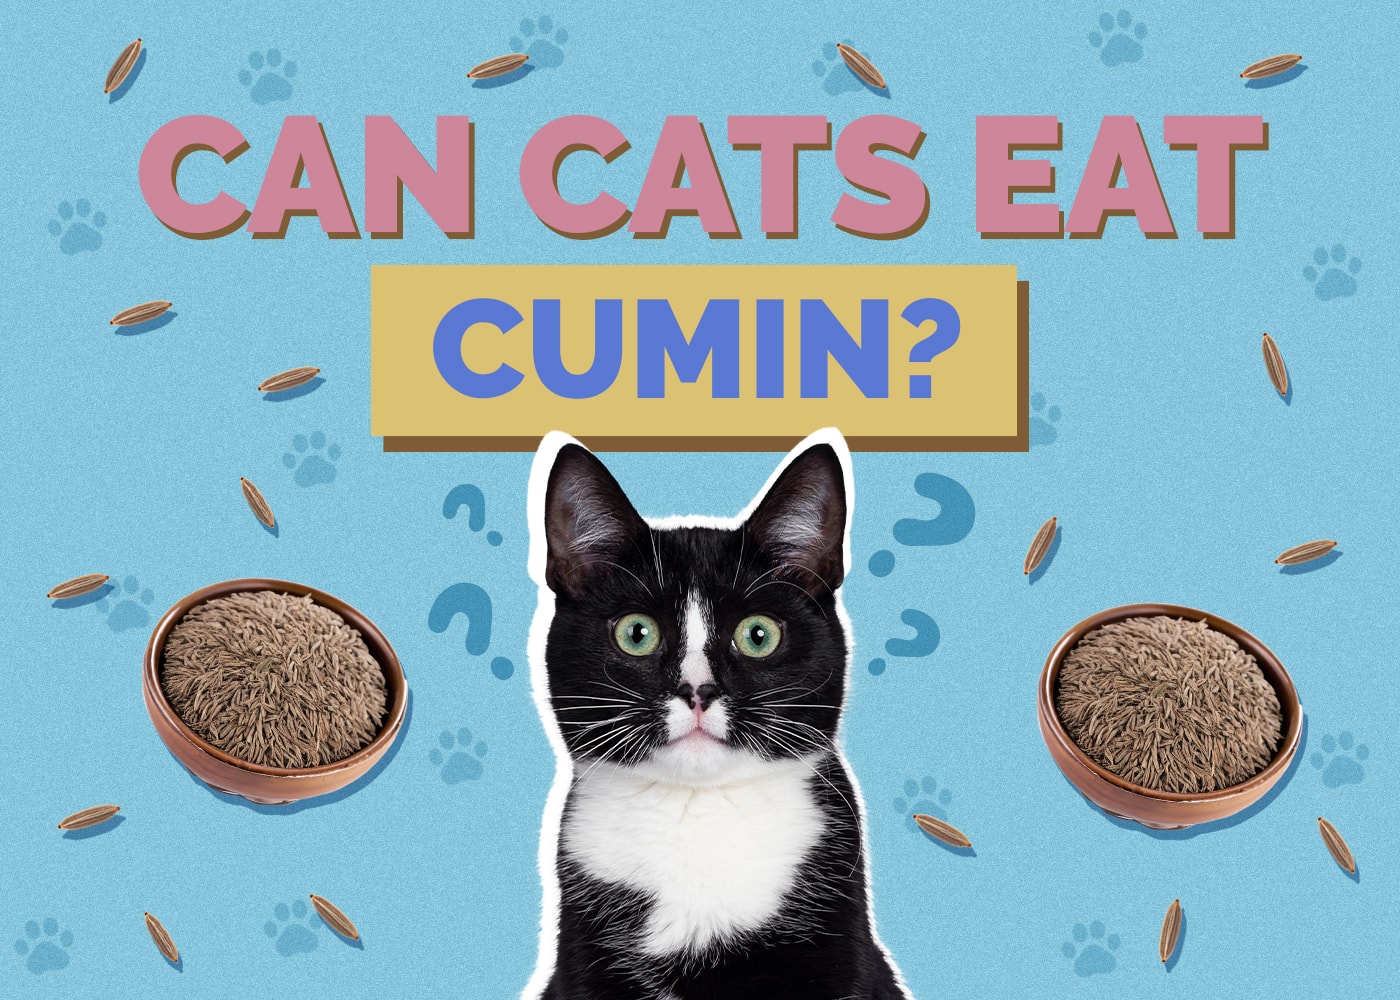 Can Cats Eat cumin